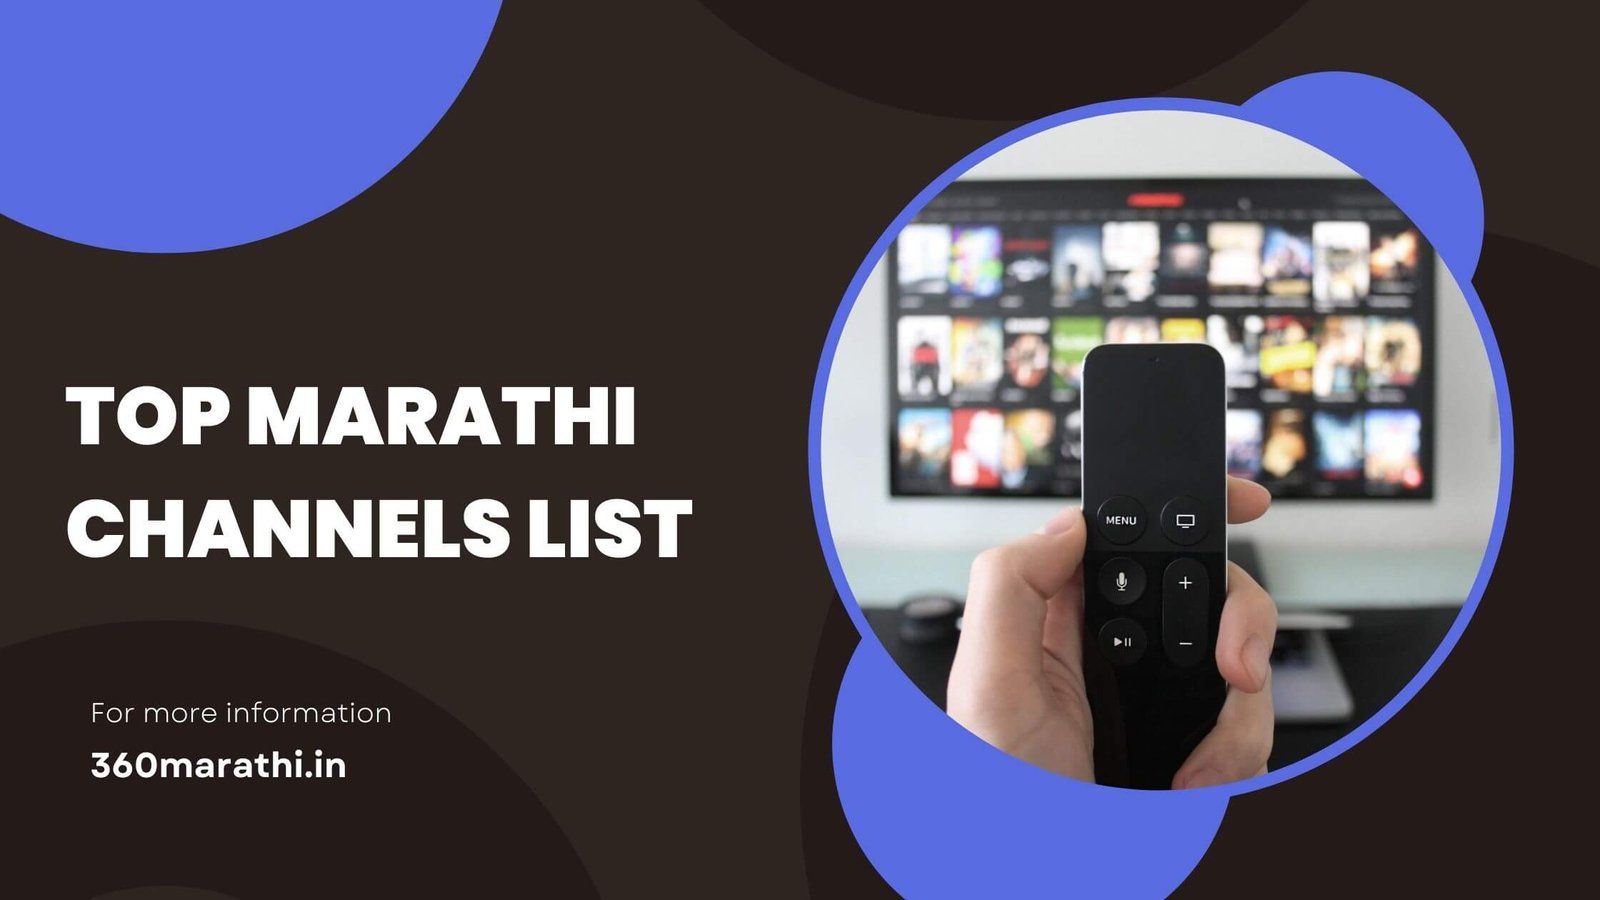 Top Marathi Channels List